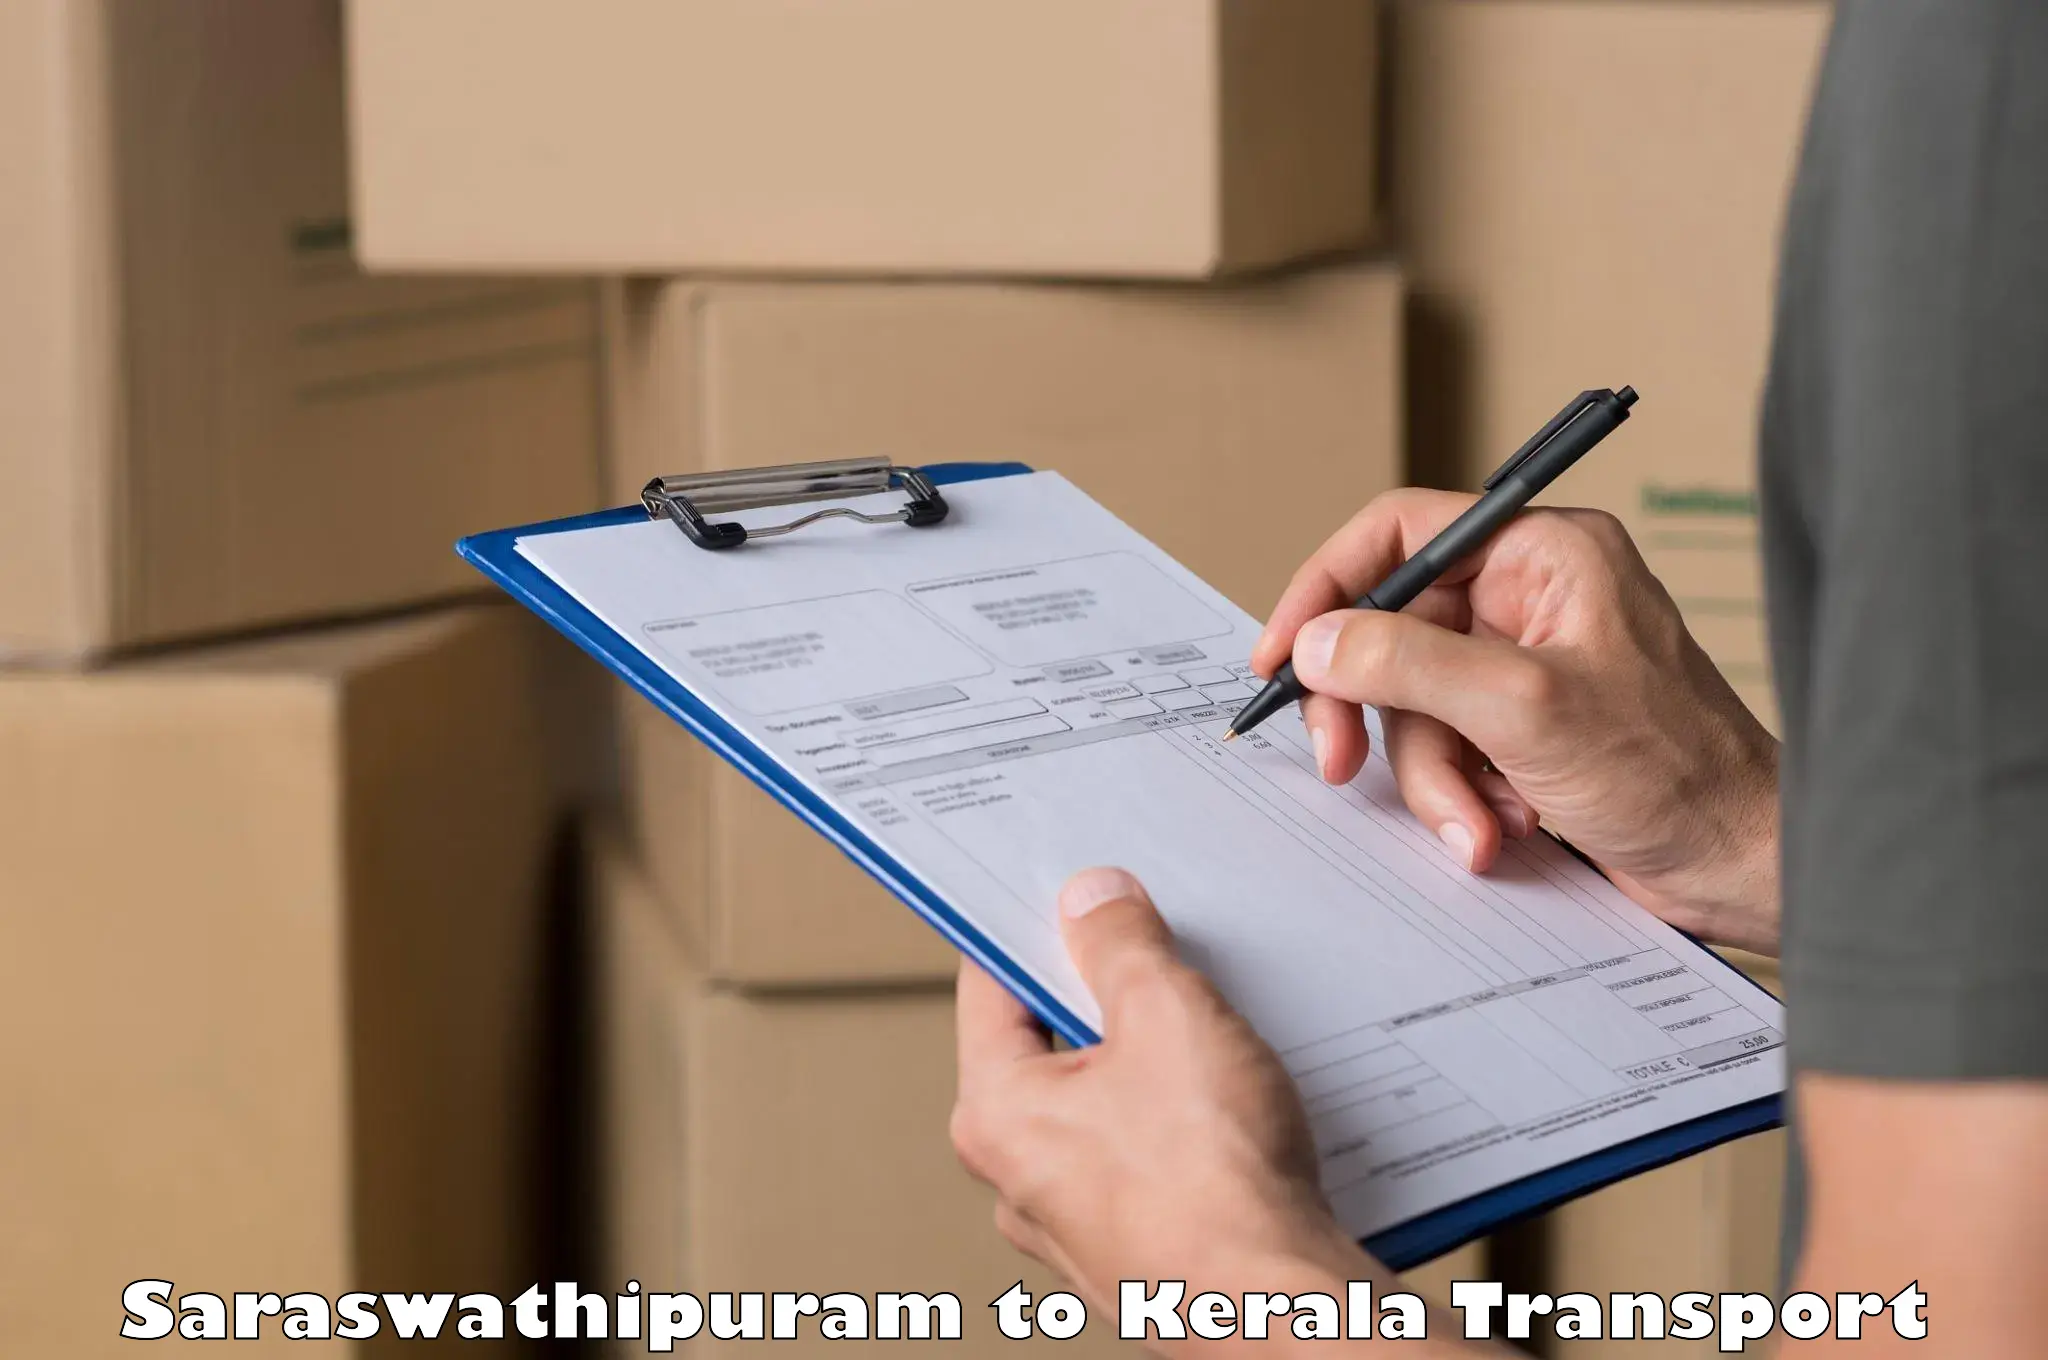 Pick up transport service Saraswathipuram to Kottayam